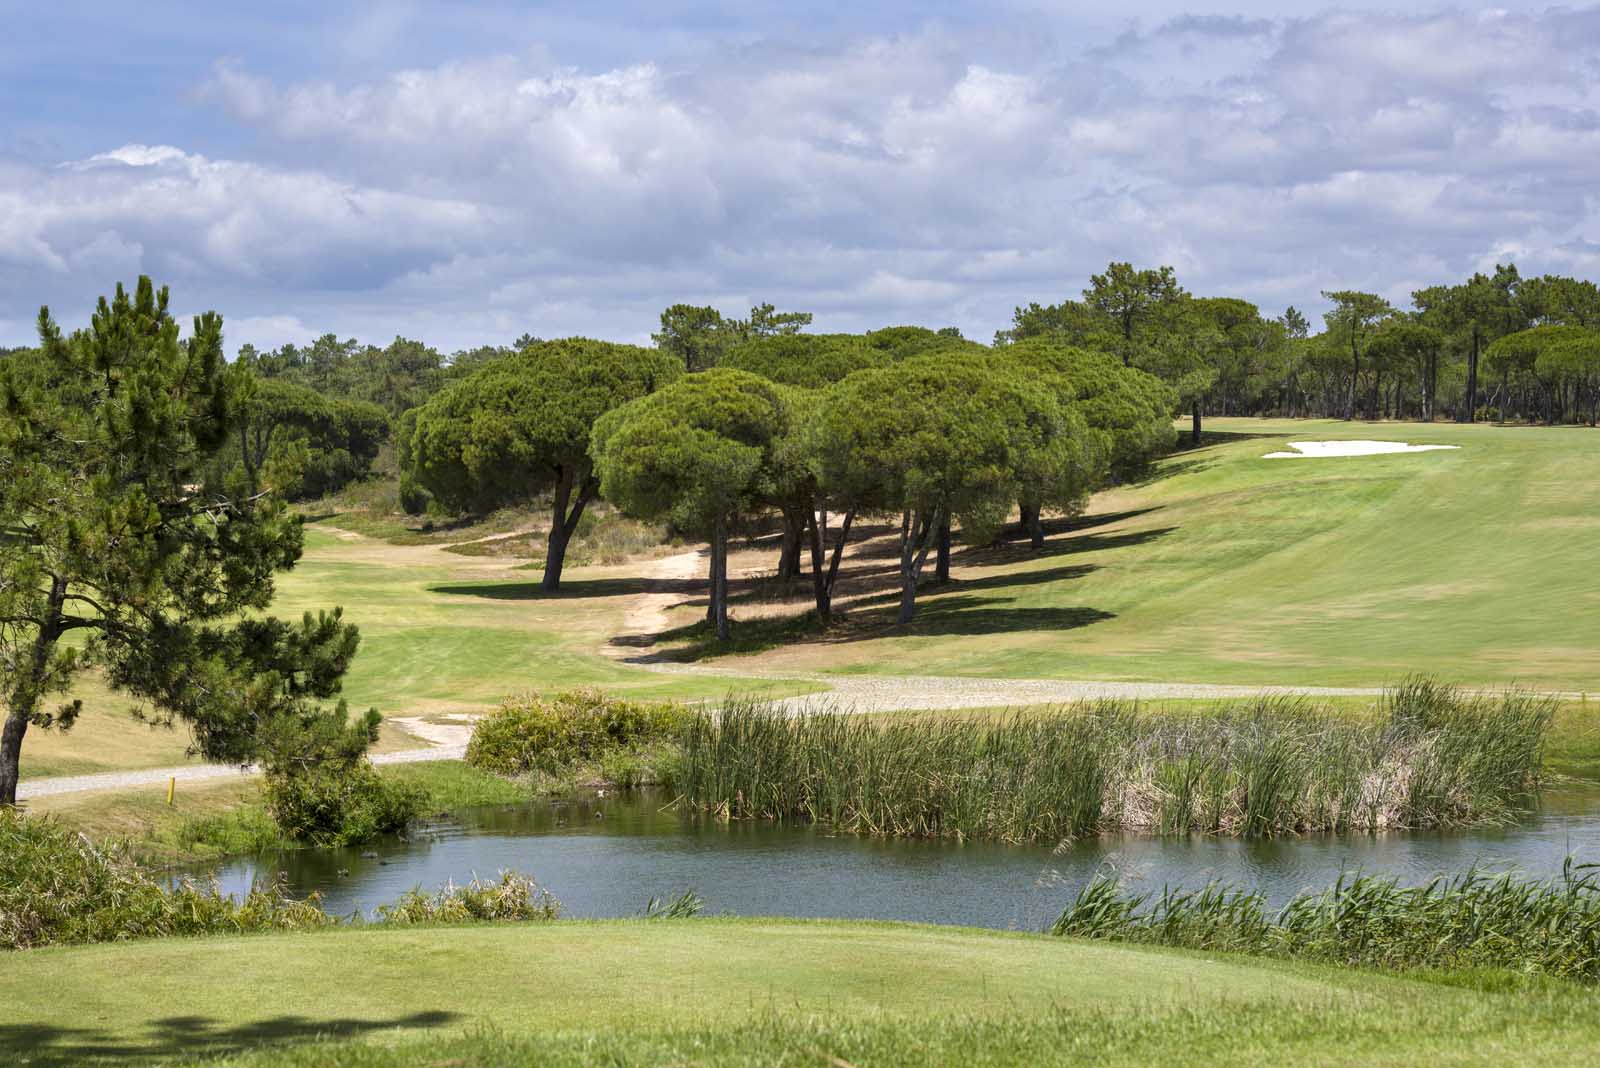 Golfe em Vilamoura no Algarve Portugal